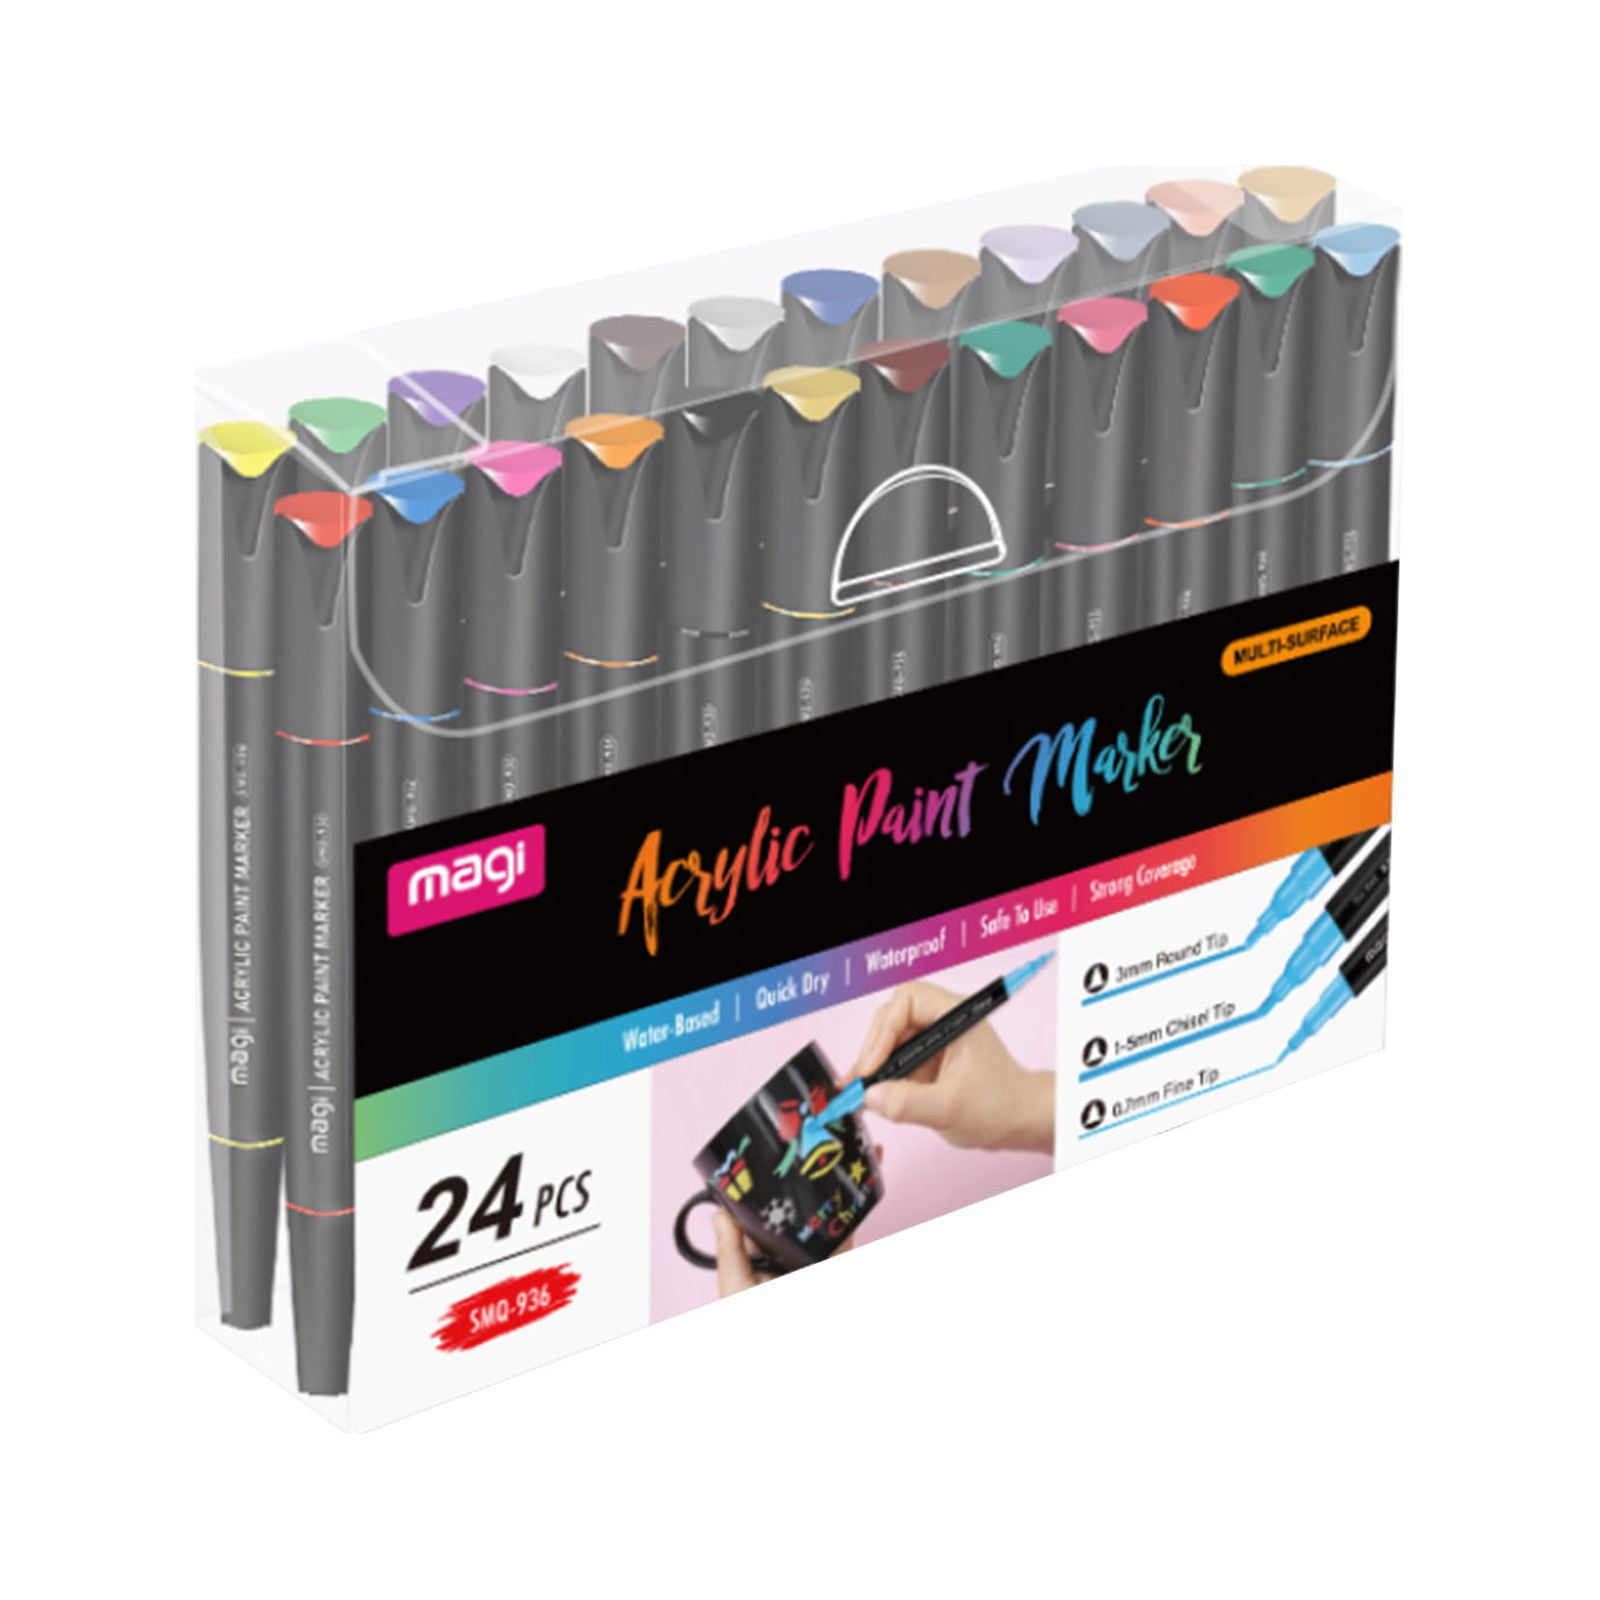 1set(12pcs) 12 Colors Hand-painted Soft Tip Brush Marker Acrylic